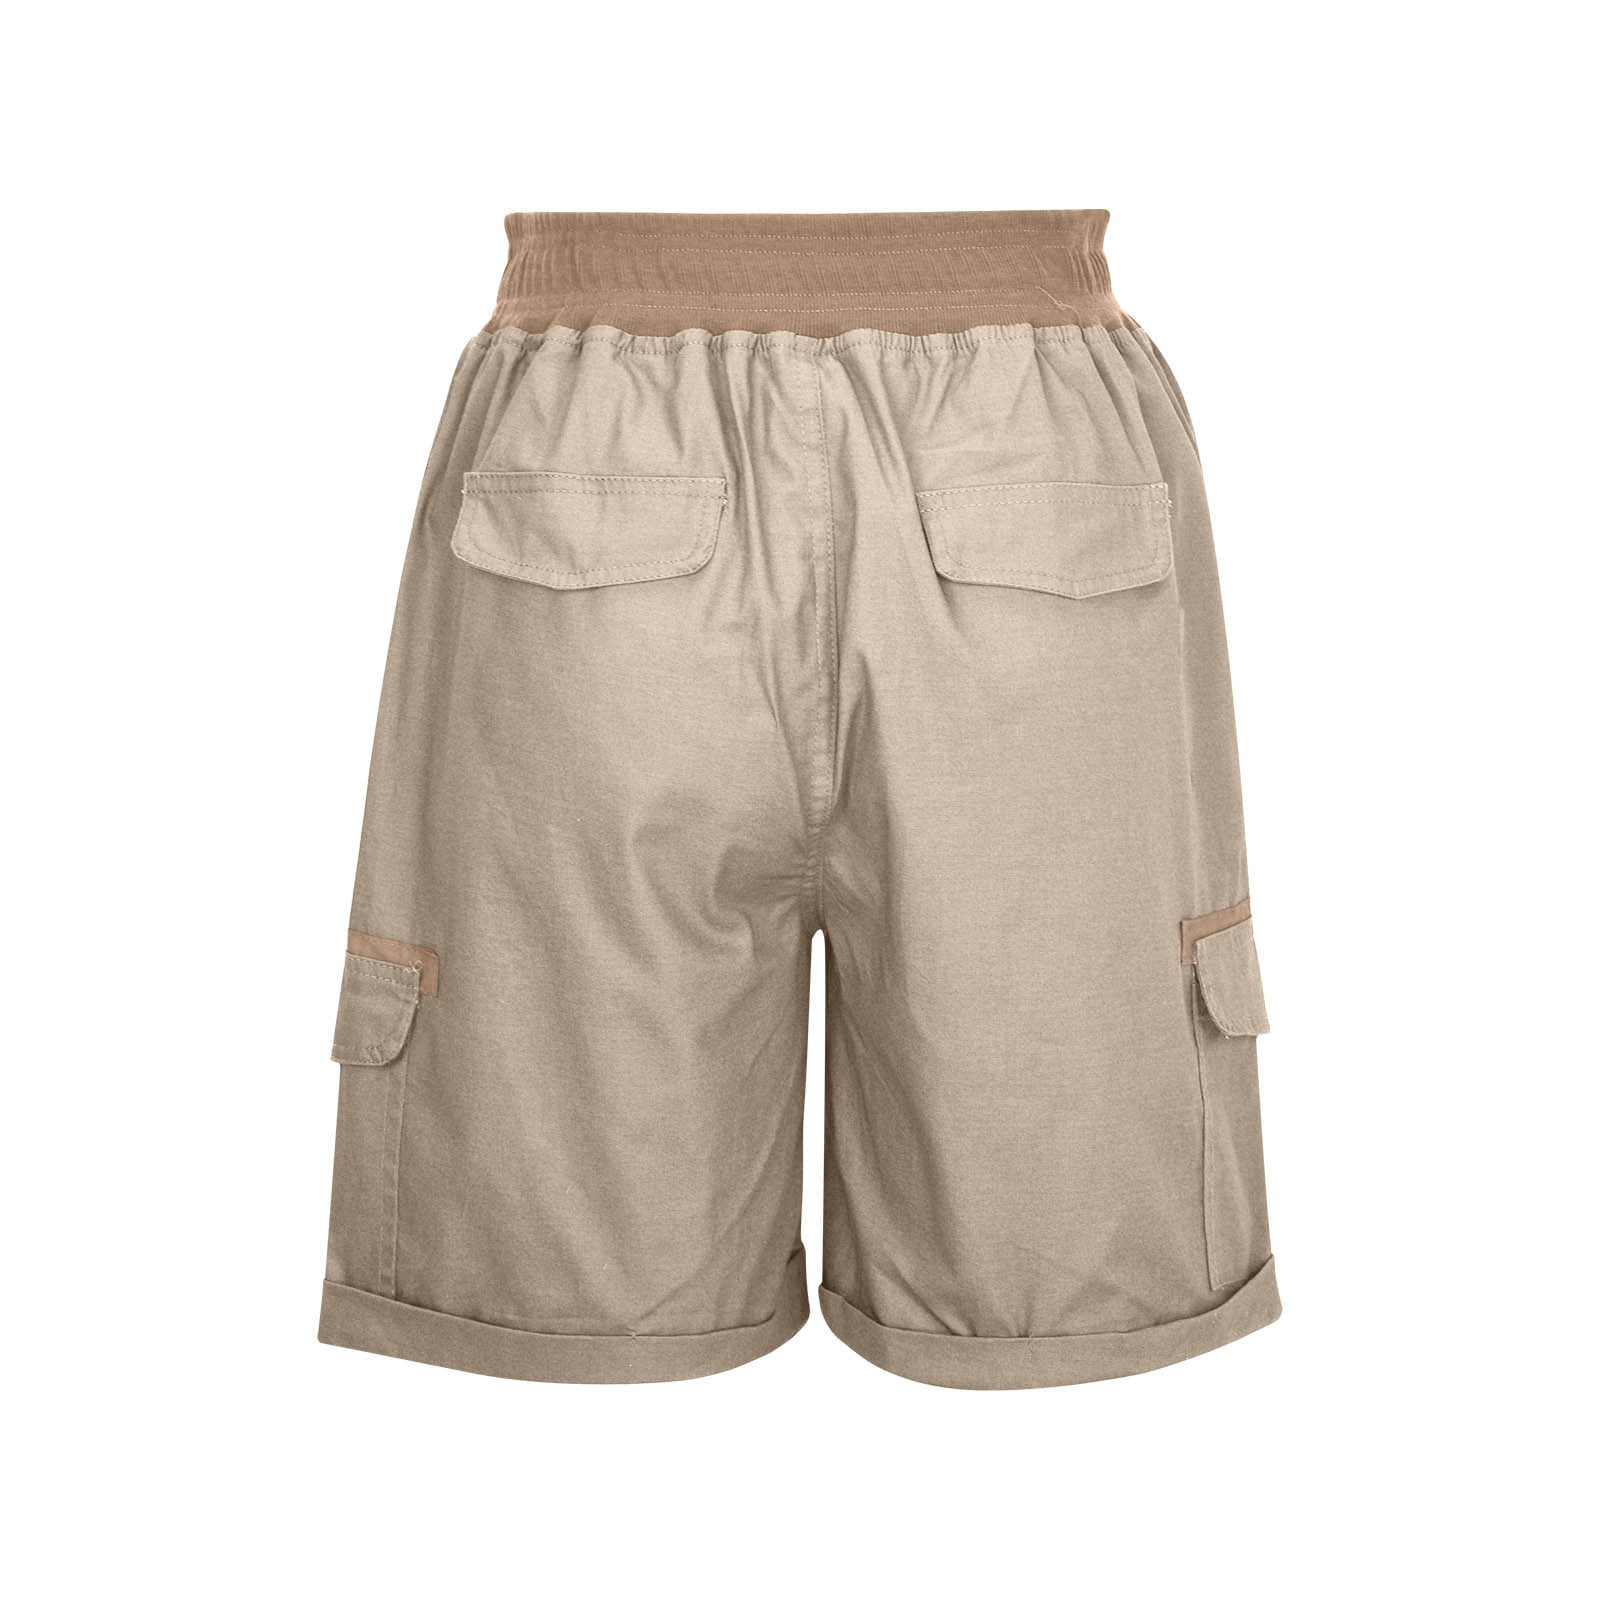 Capreze Lounge Bermuda Shorts for Women Drawstring Elastic Waist Summer  Beach Cargo Short with Pocket for Hiking Fishing